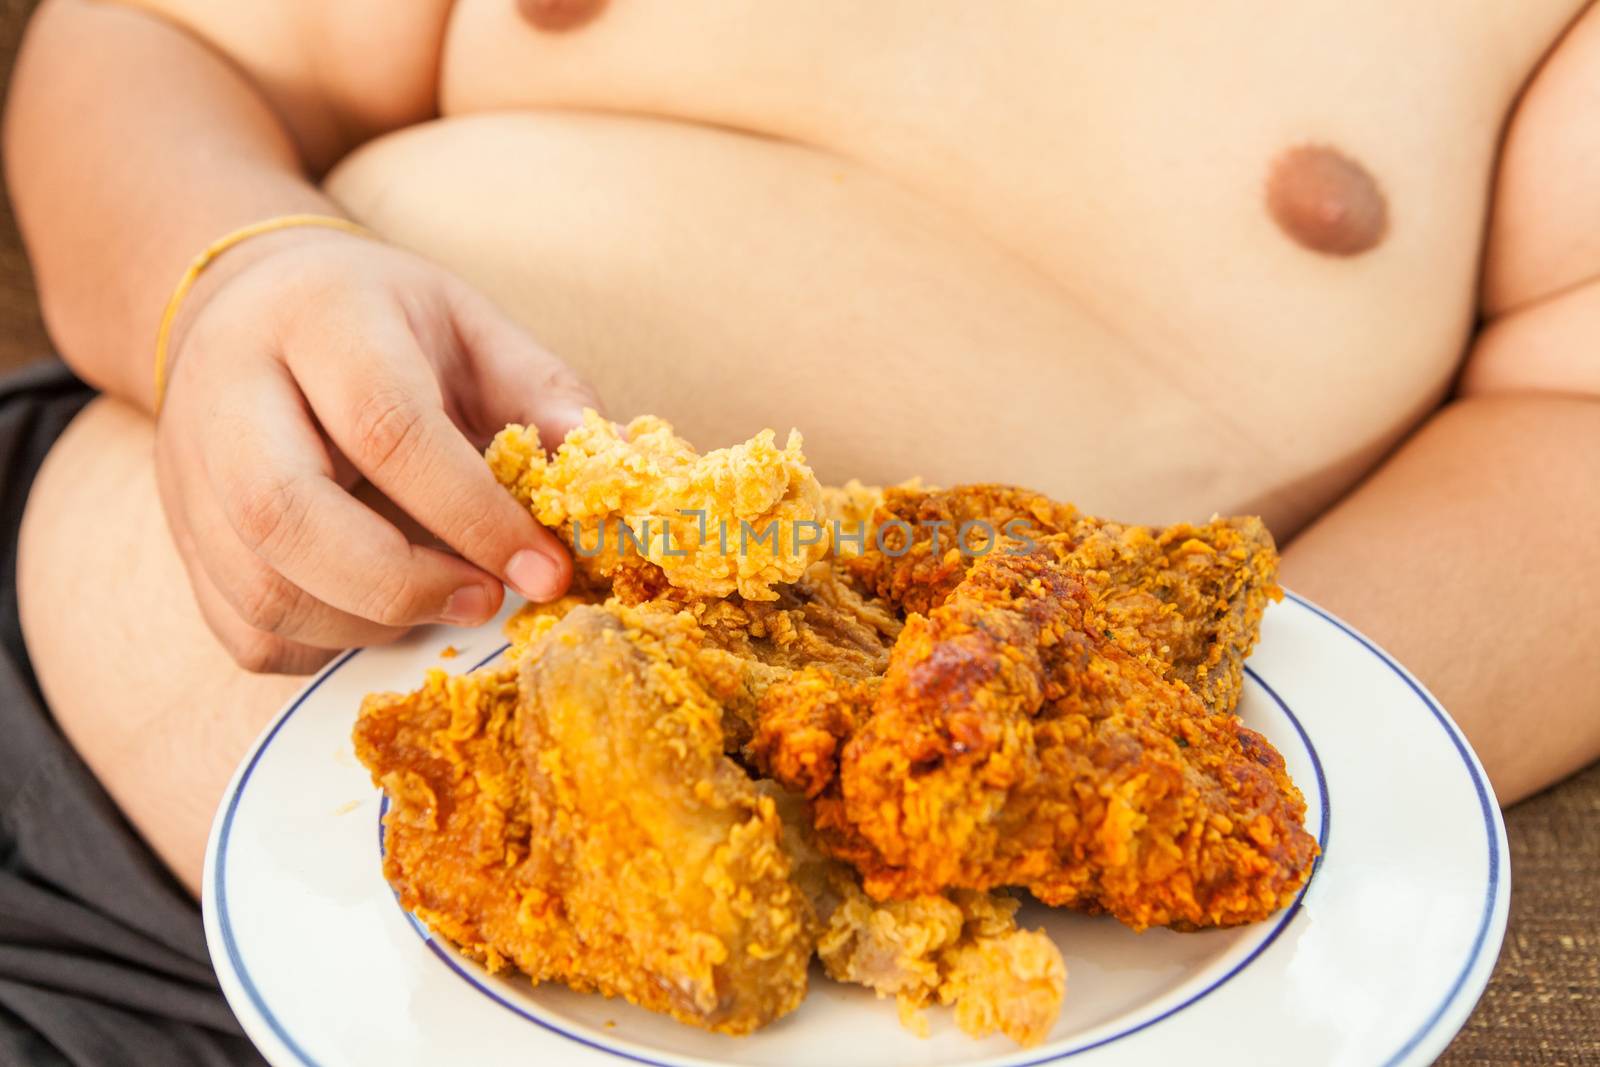 Asian fat man eating fried chicken